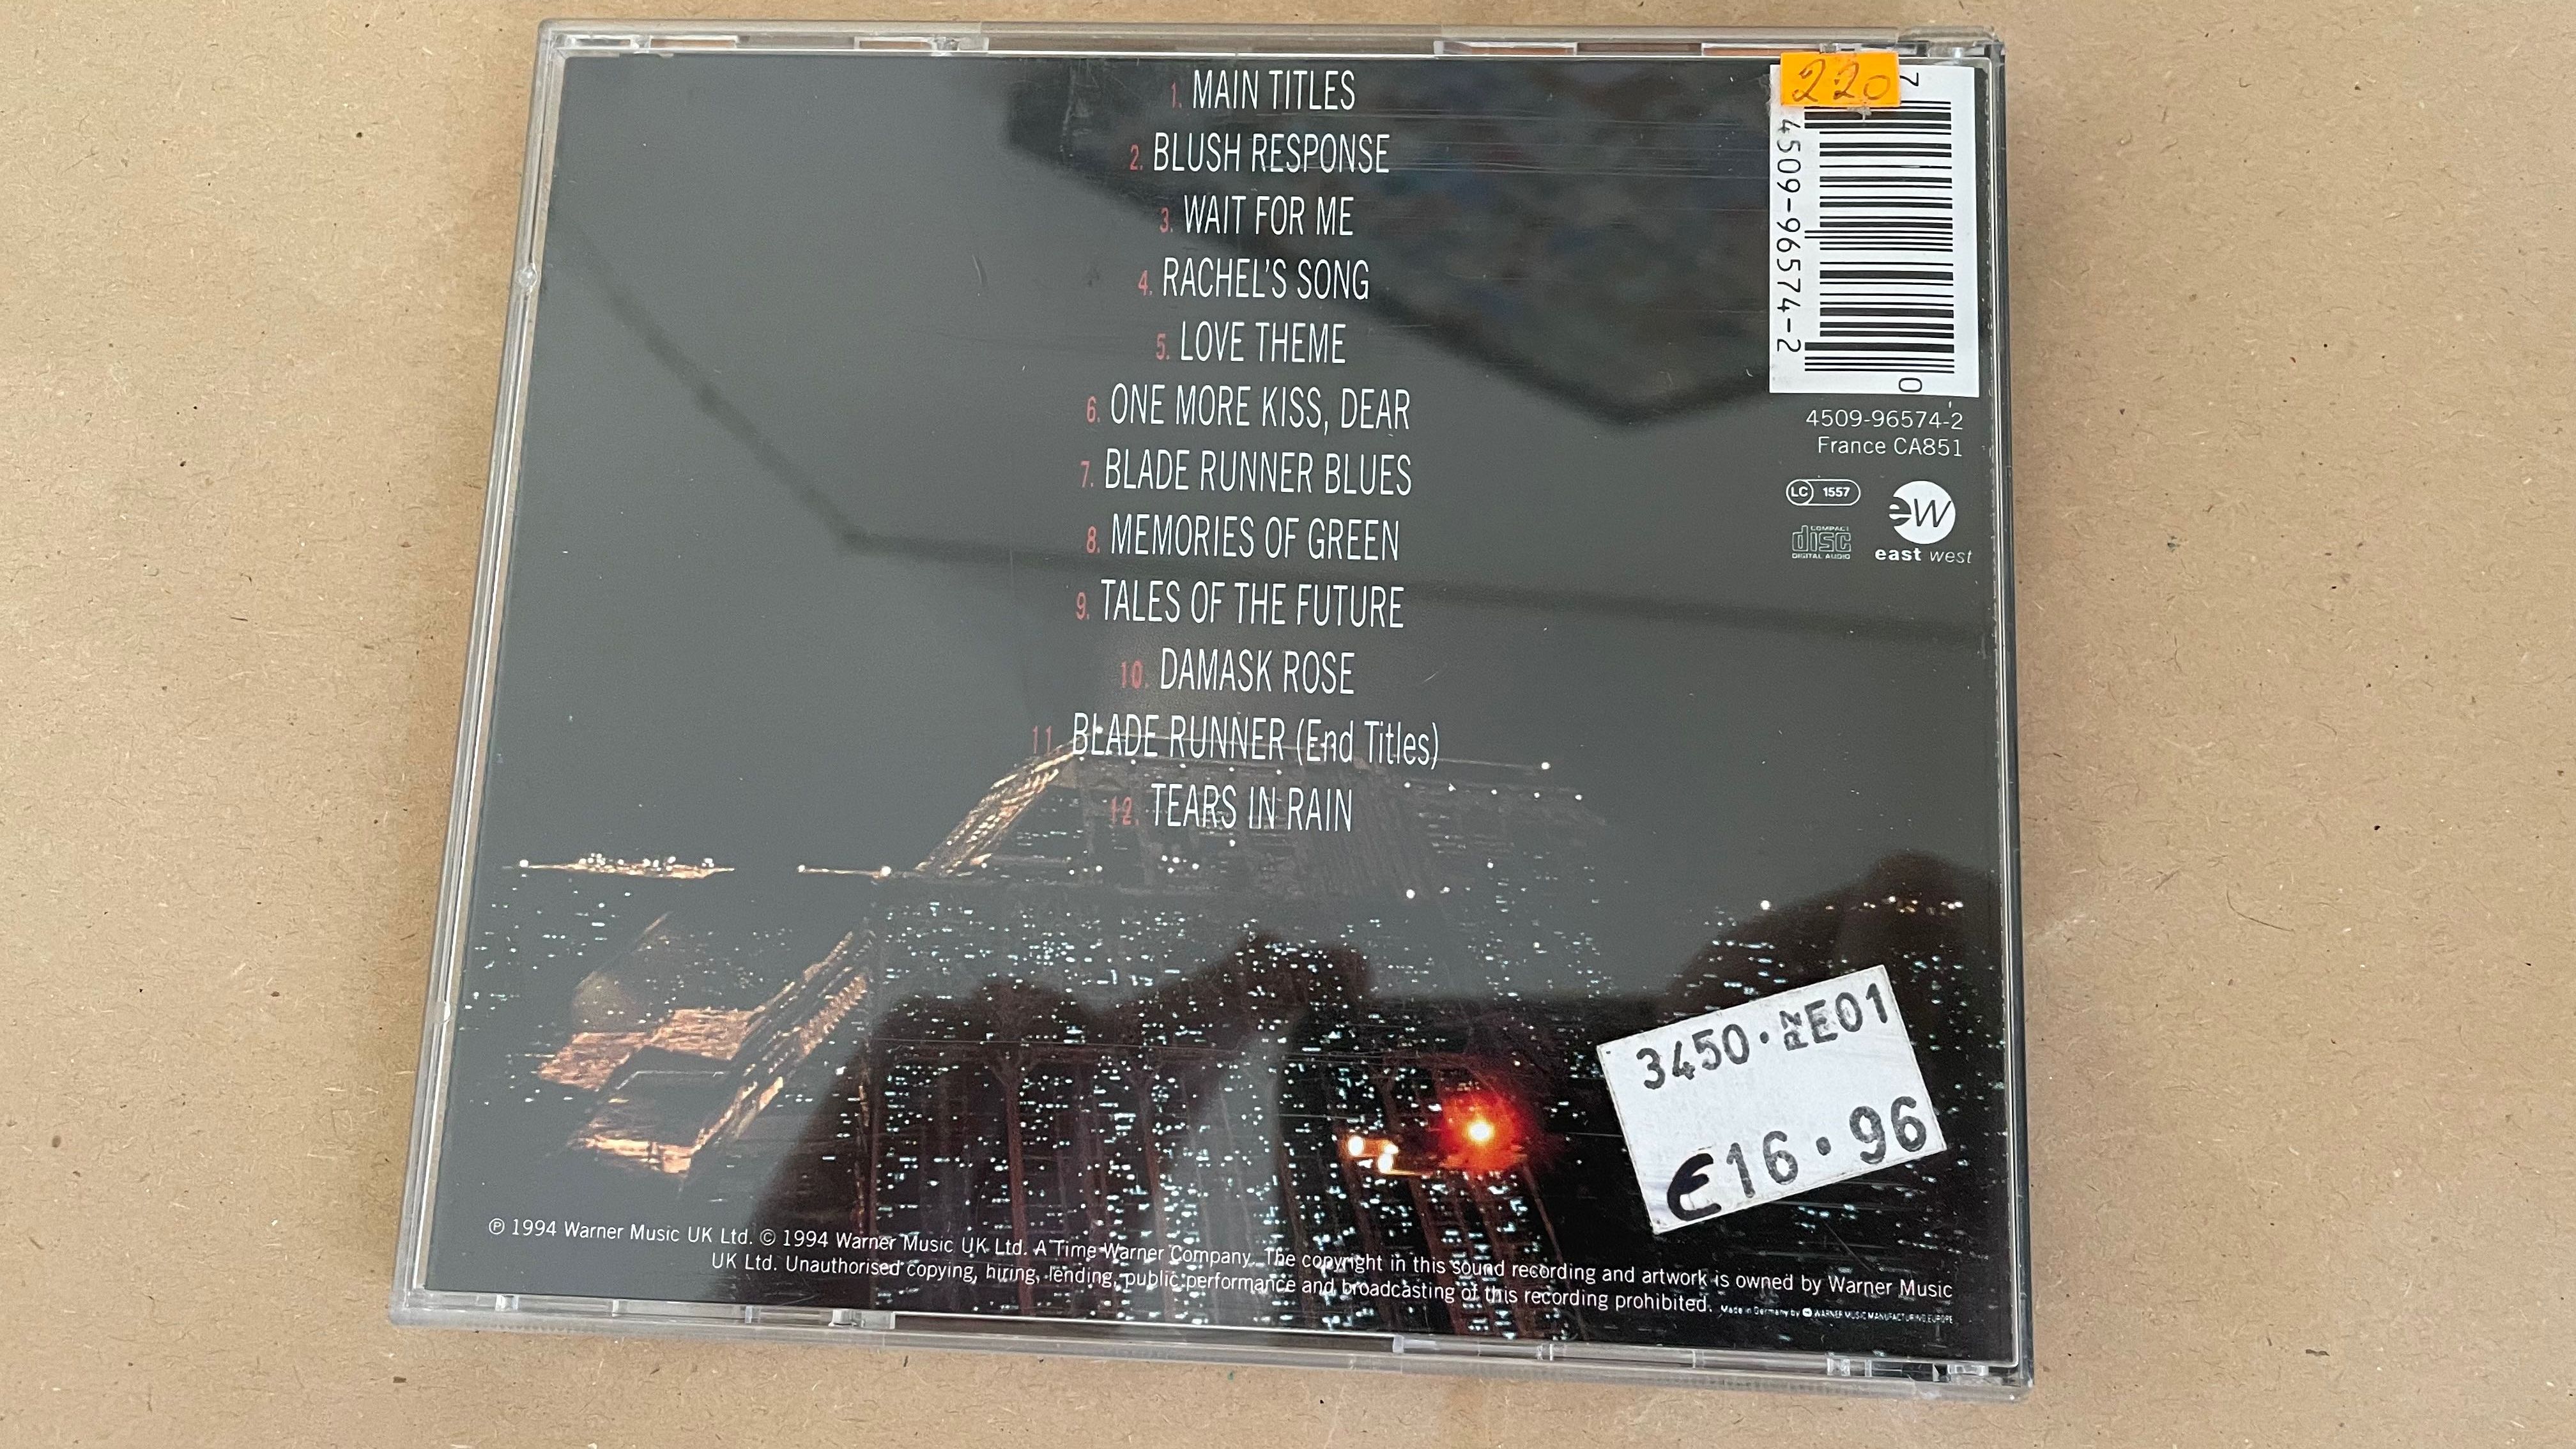 Cd - Vangelis - OST - Blade Runner